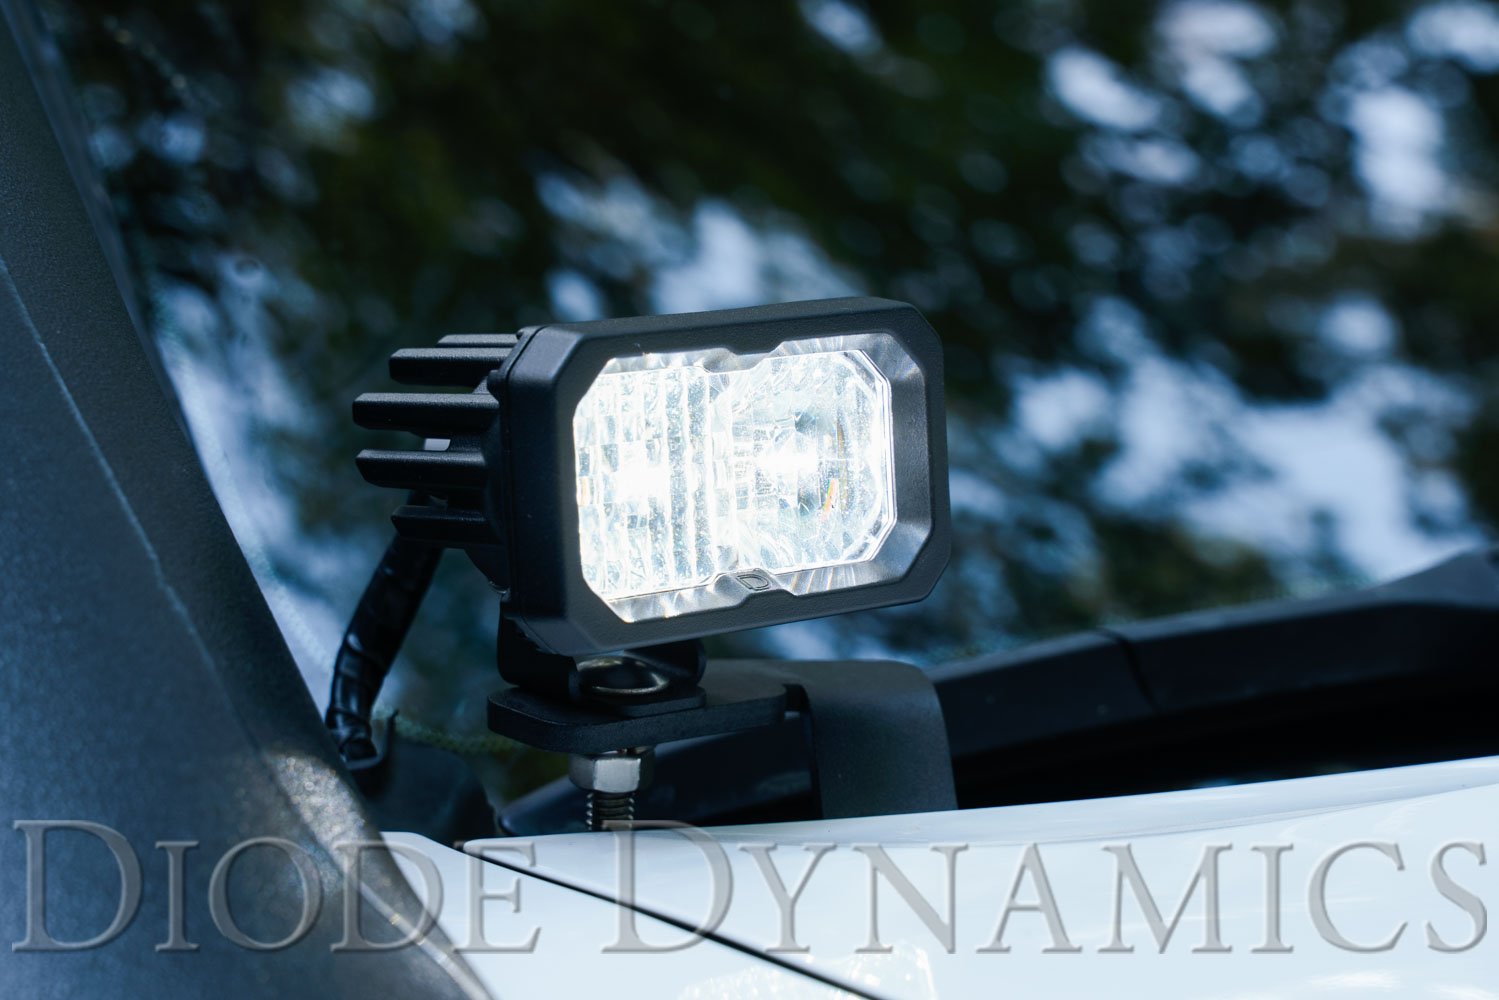 Diode Dynamics Stage Series 2 Inch LED Pod, Sport White Spot Standard BBL Each